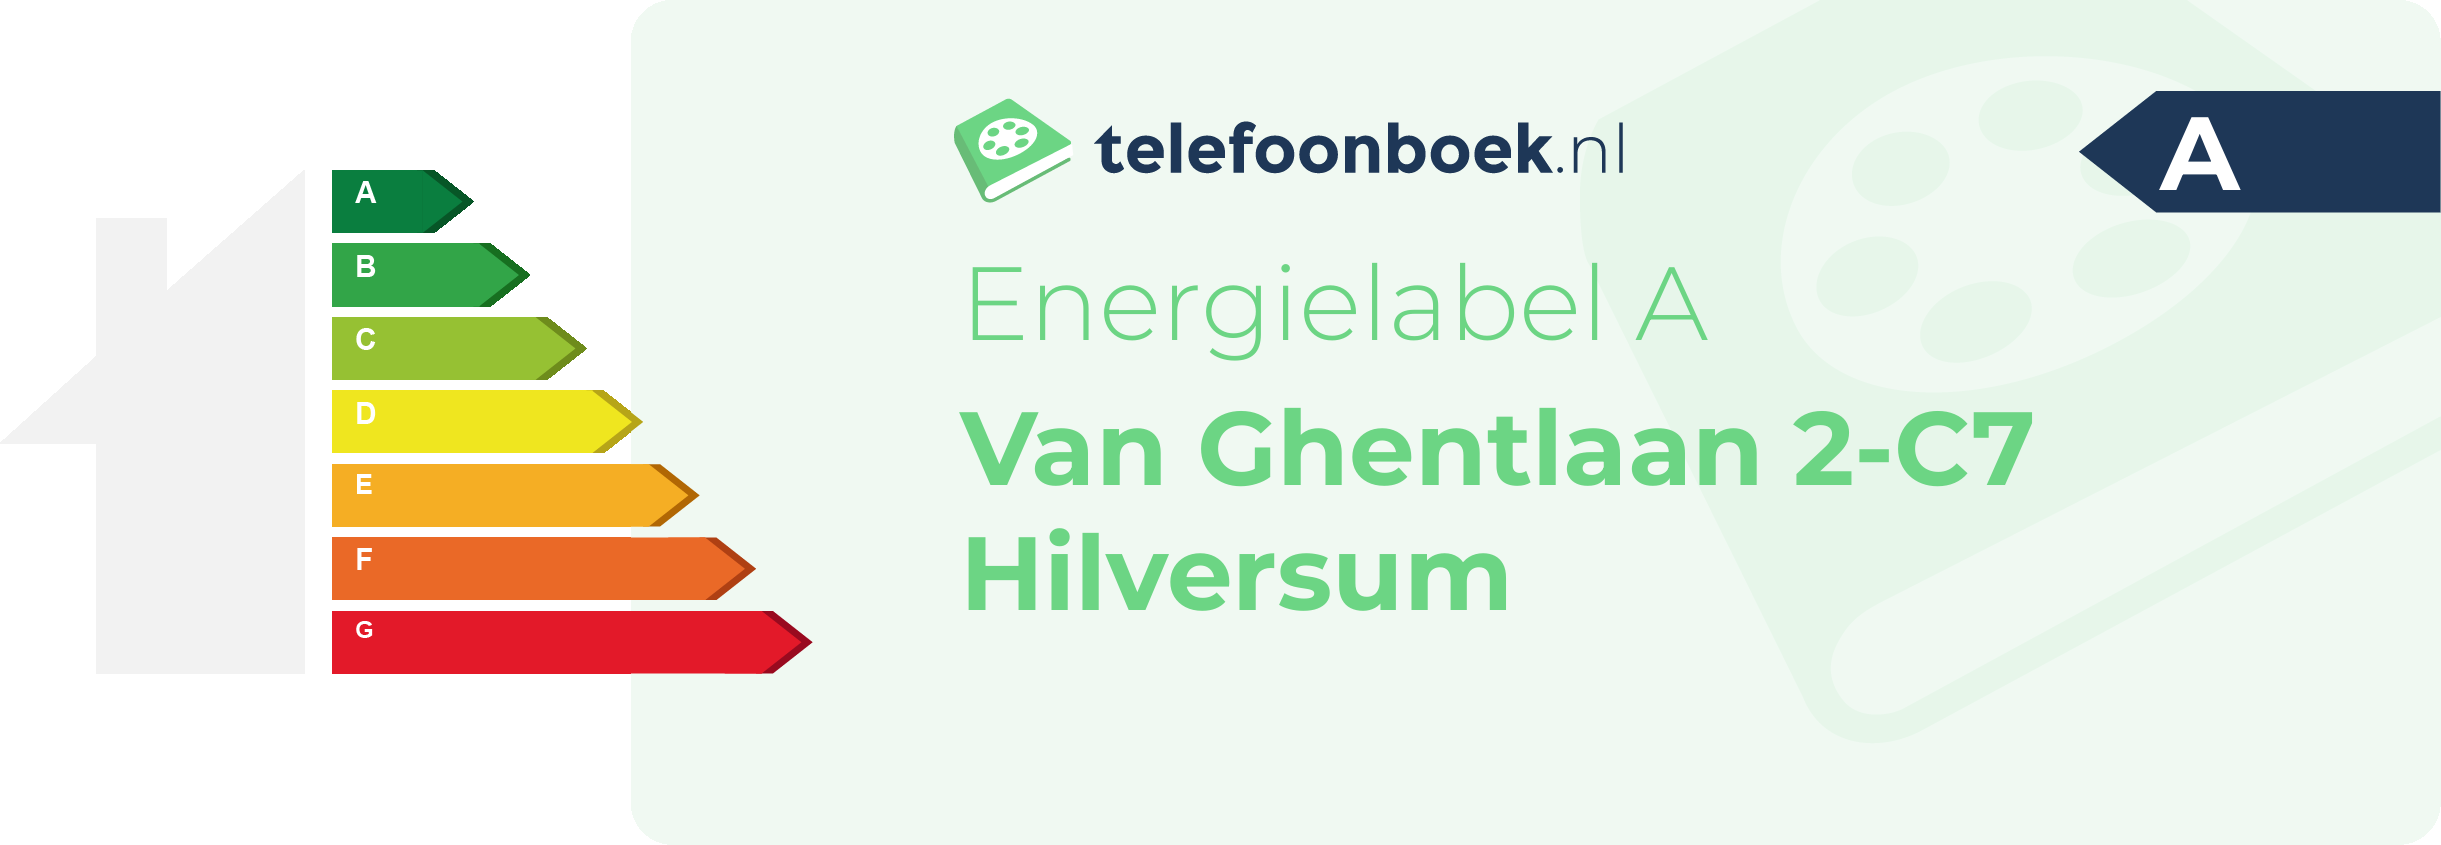 Energielabel Van Ghentlaan 2-C7 Hilversum